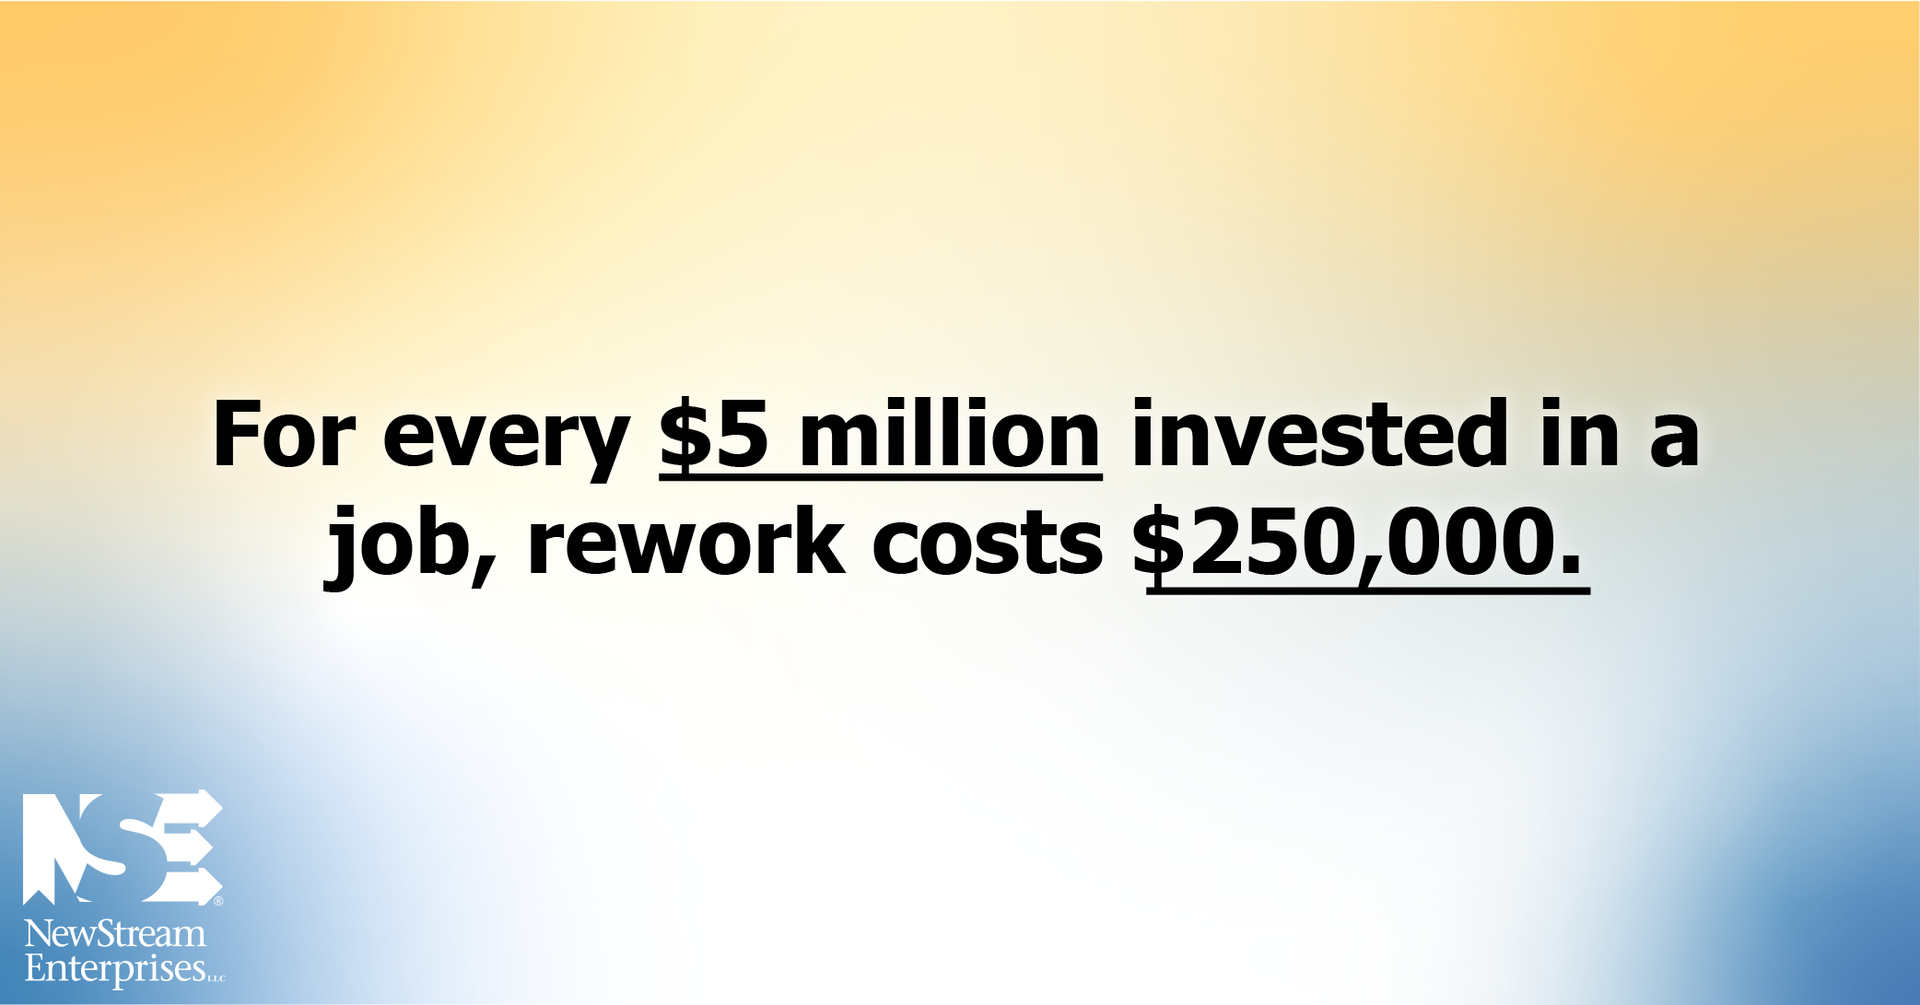 Rework cost